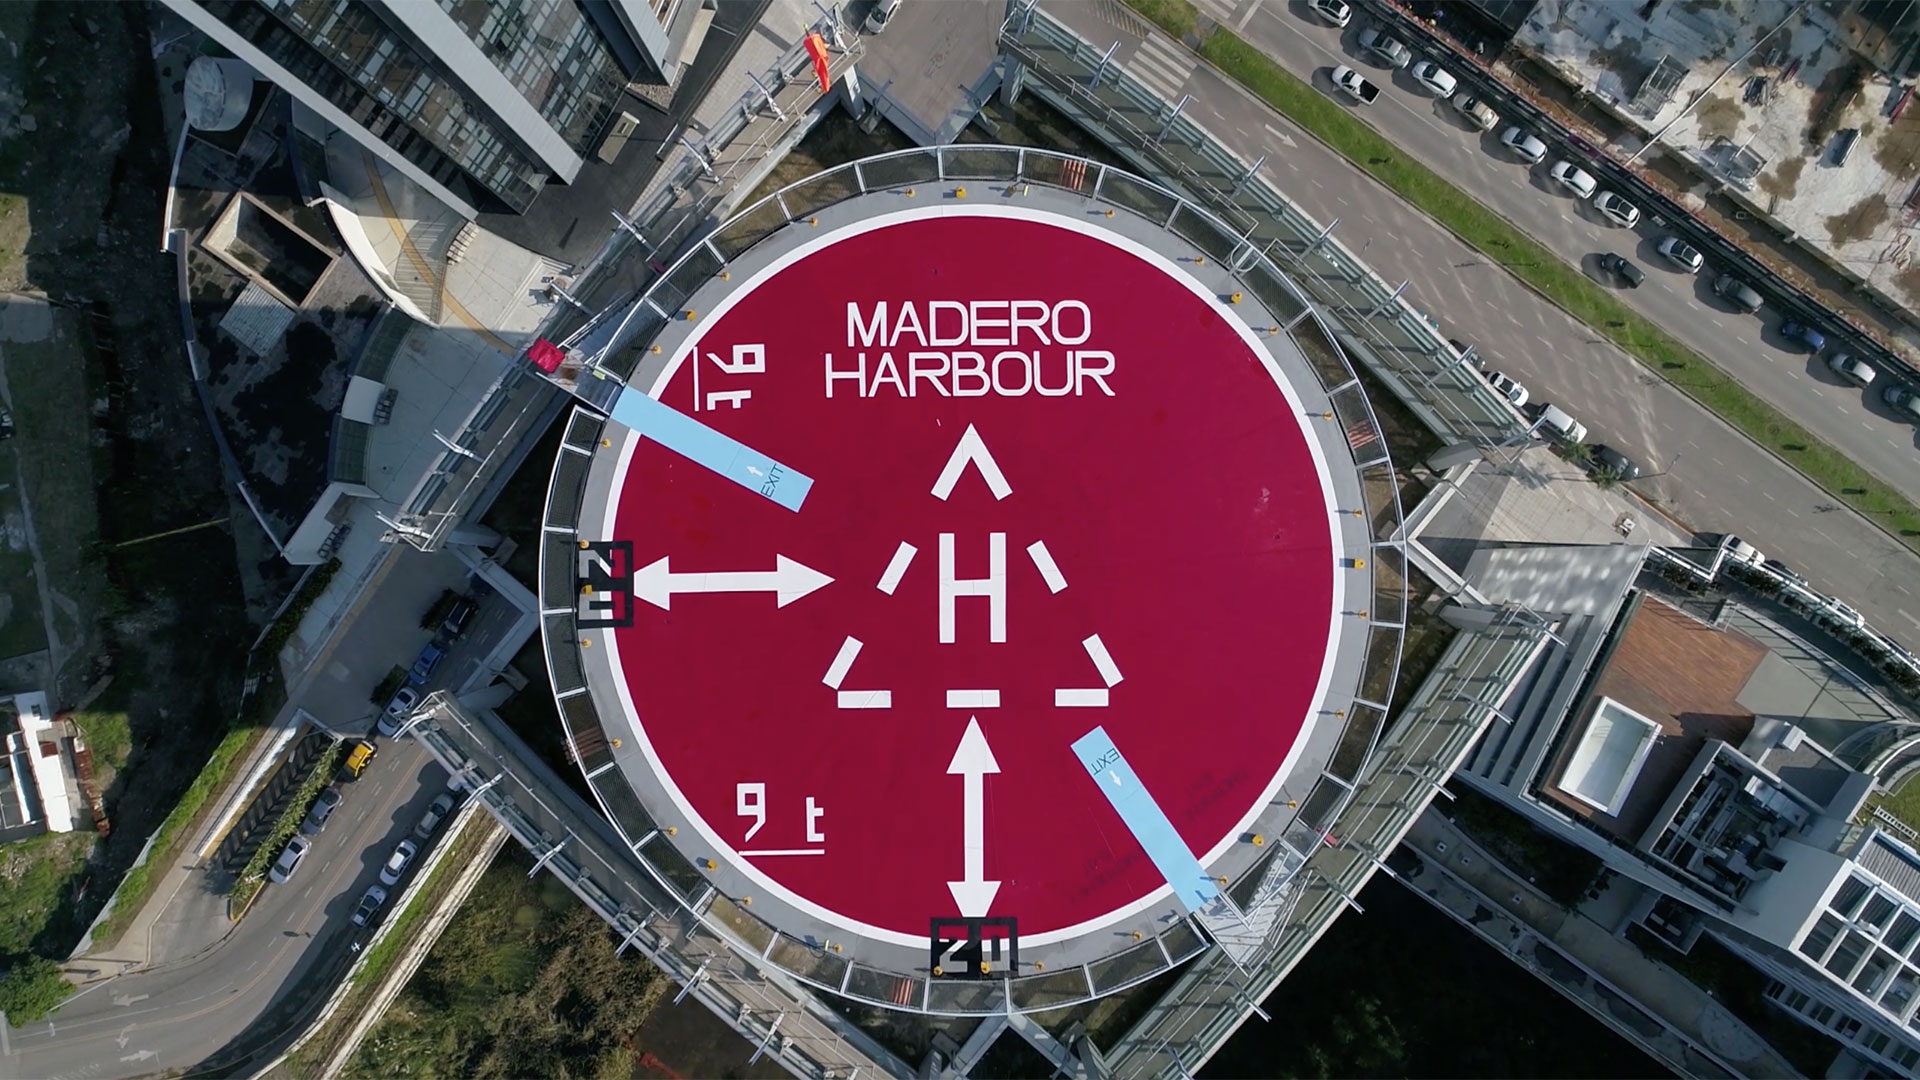 Madero Harbour posee helipuerto, algo único